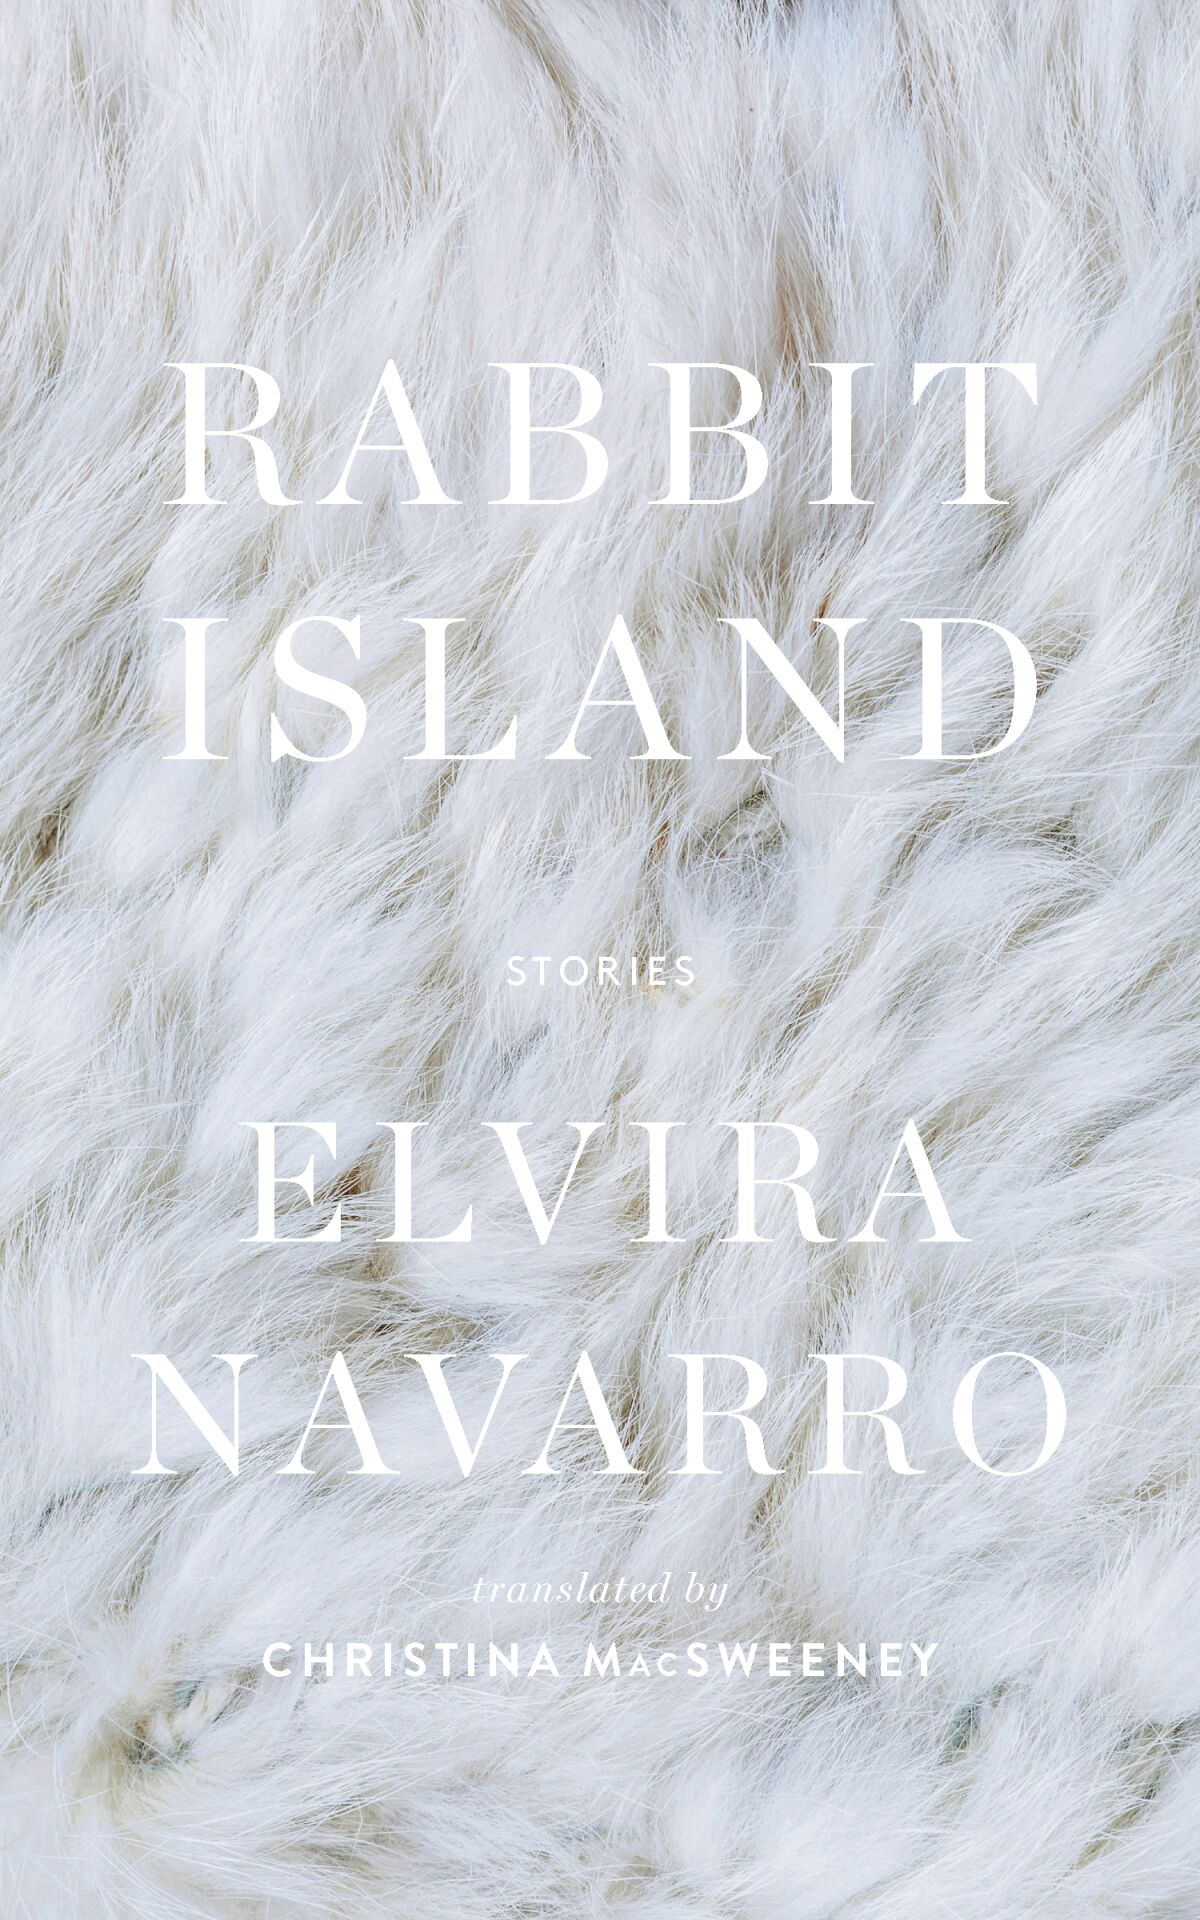 Book jacket for "Rabbit Island" by Elvira Navarro.